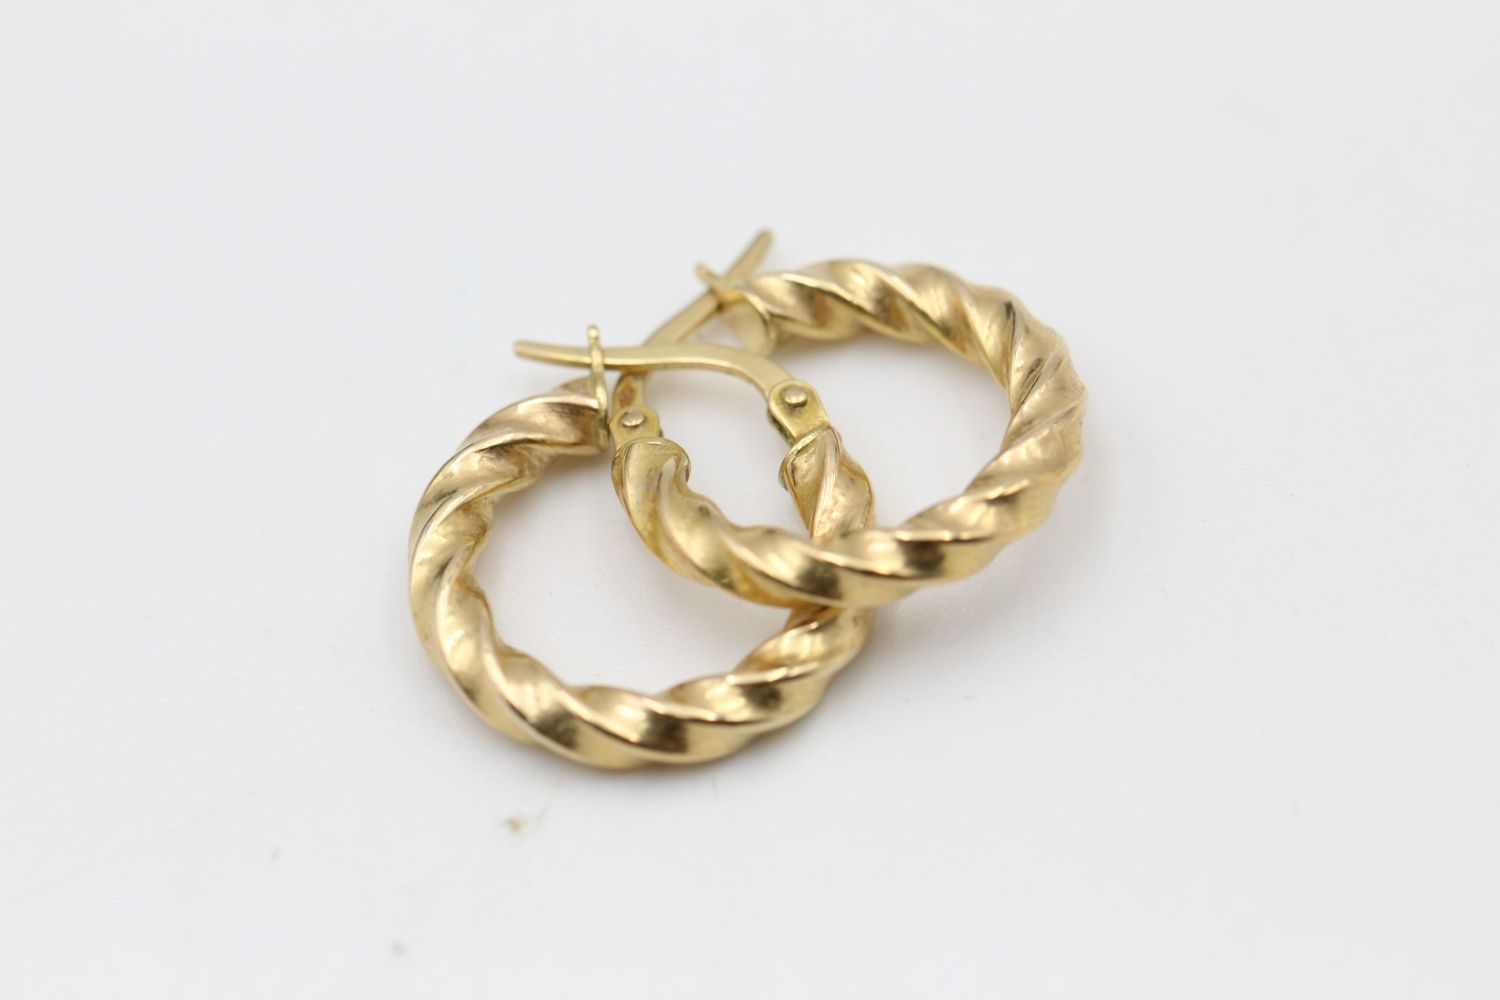 2 x 9ct gold tricolor and rope twist hoop earrings 4.2 grams gross - Image 2 of 5